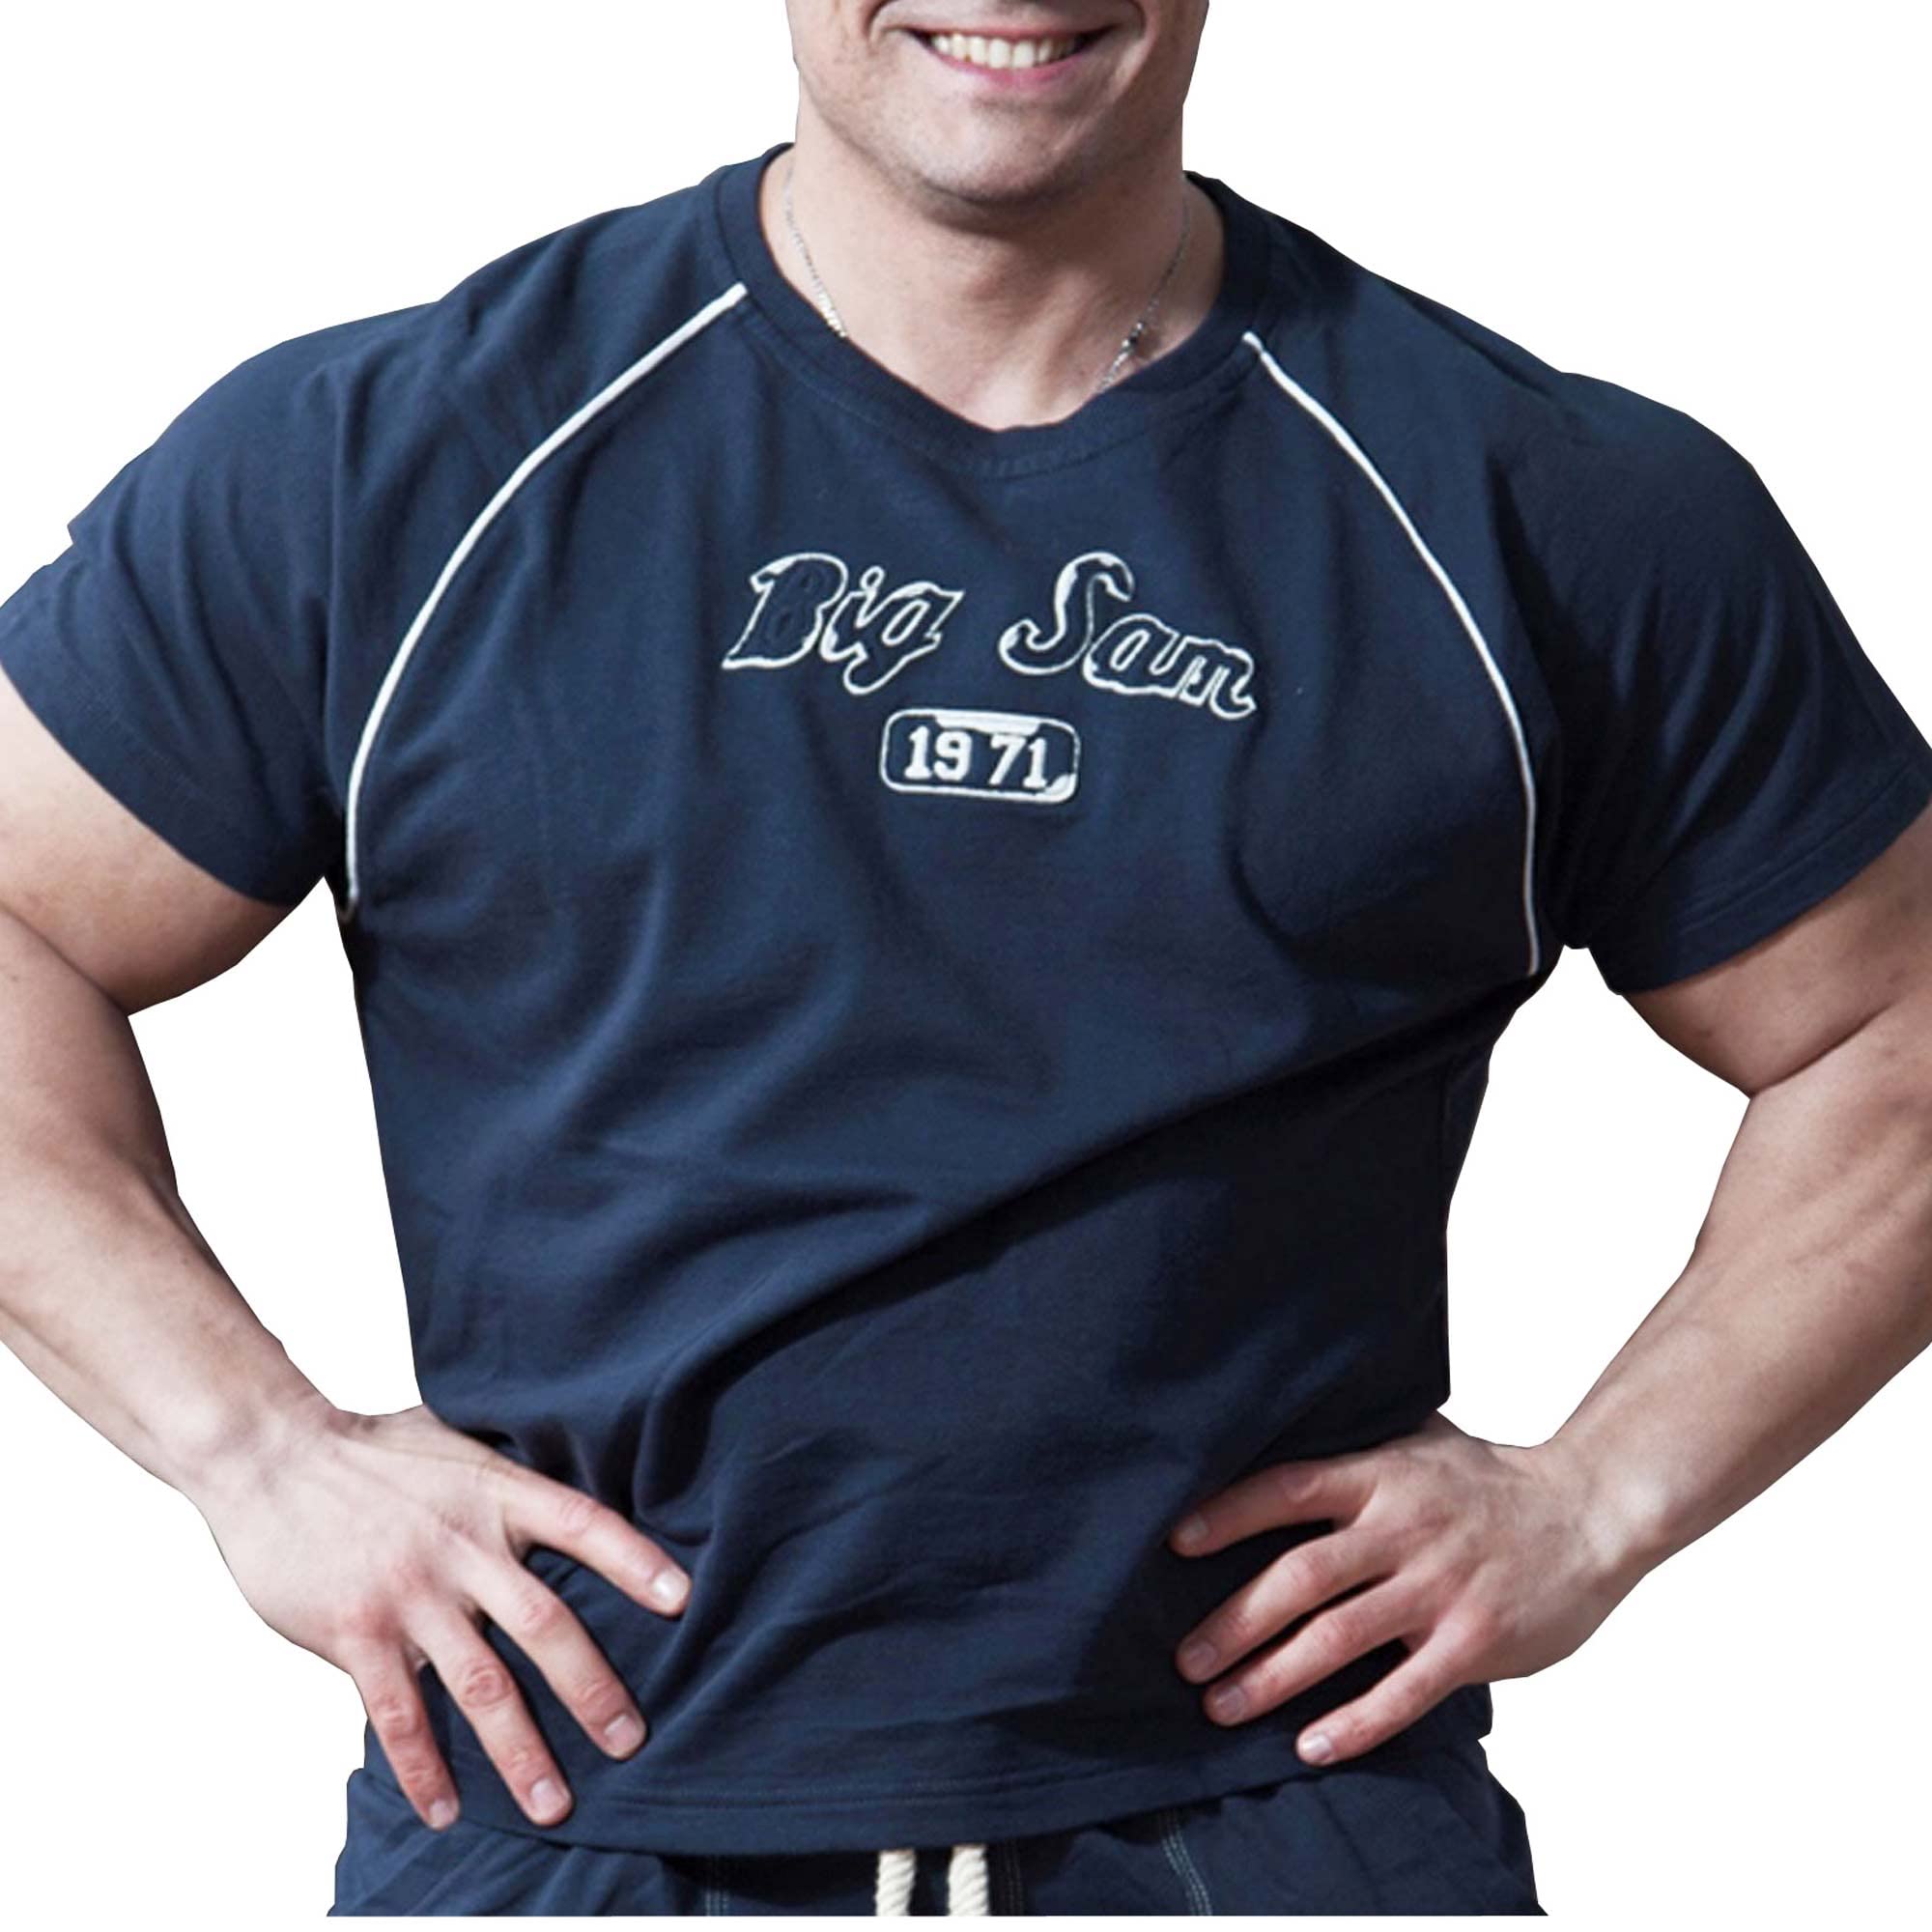 BIG SM EXTREME SPORTSWEAR Herren Ragtop Rag Top Sweater T-Shirt Bodybuilding 3116 blau 3XL